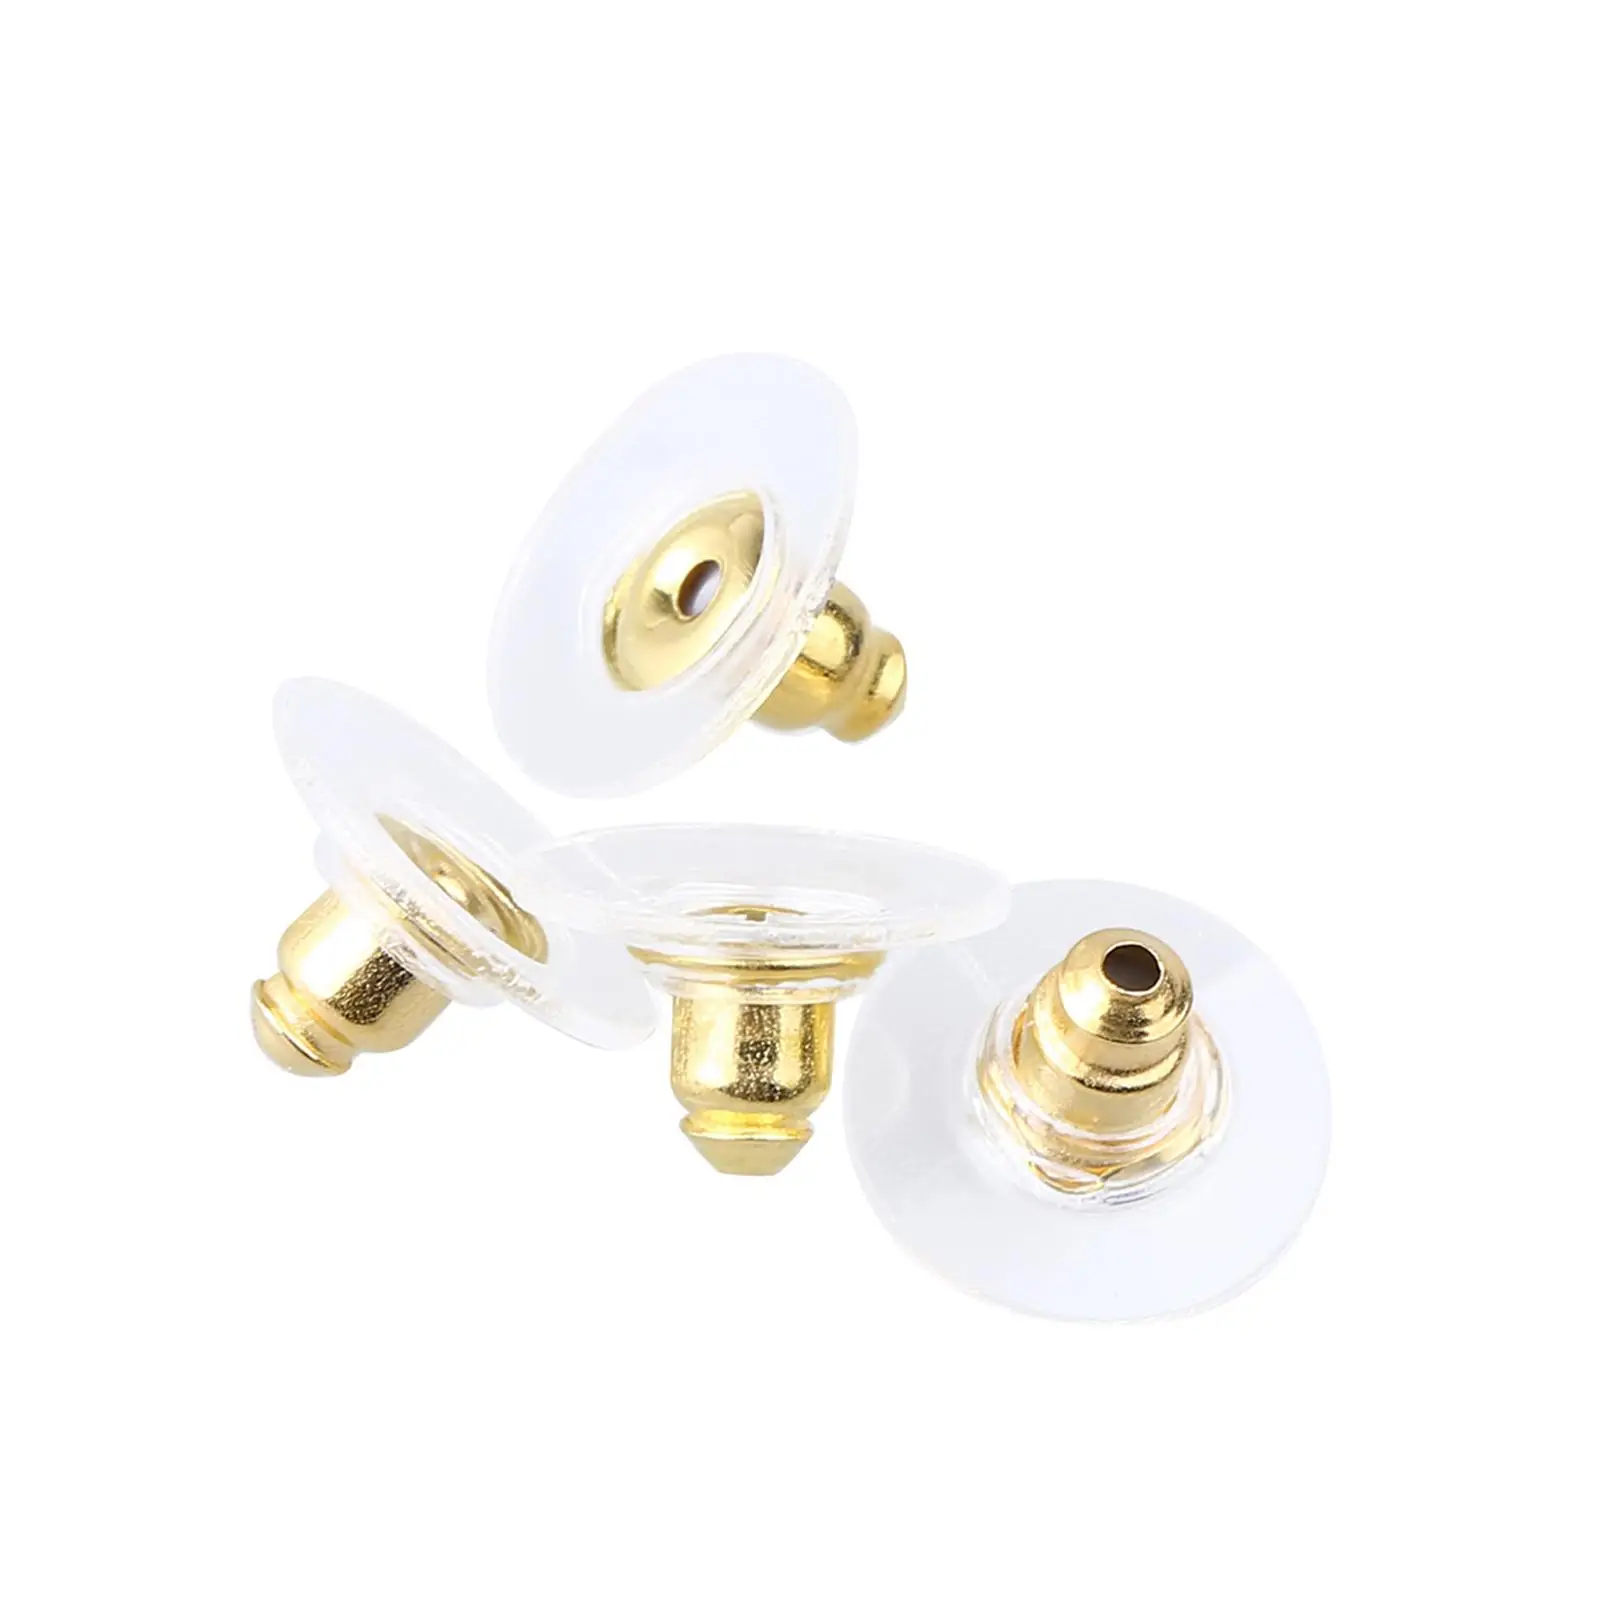 Earring Making Supplies Earring Backs Flat Pad Earring Studs Earring Posts Earring Hooks for Jewelry Making Findings Accessories